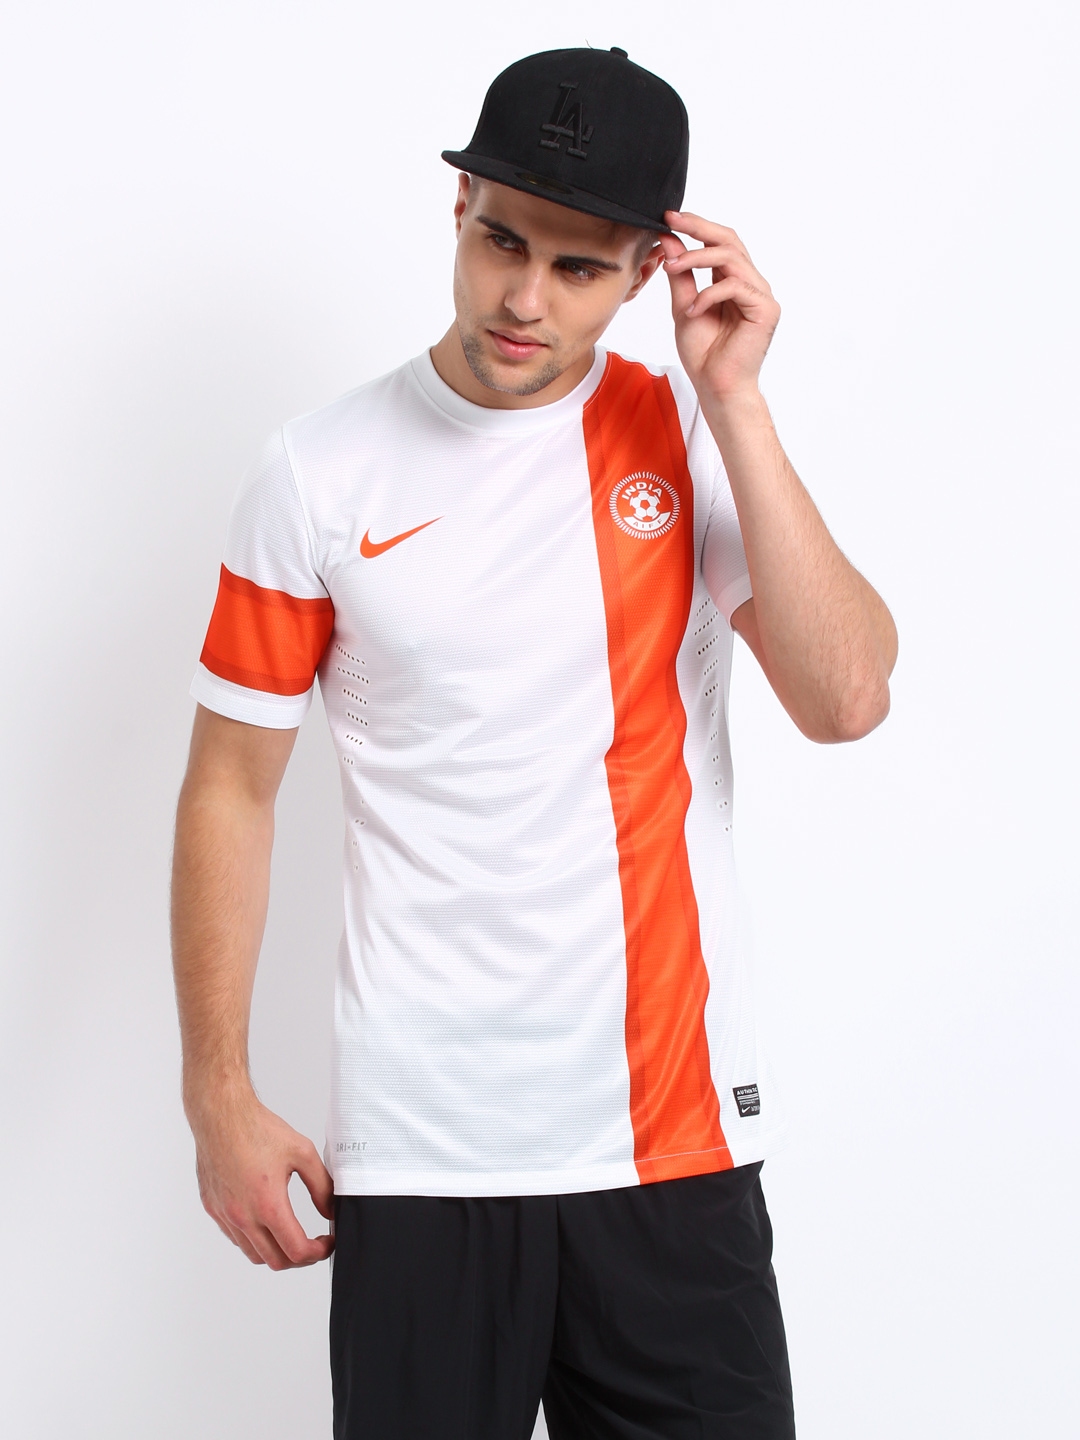 white and orange jersey